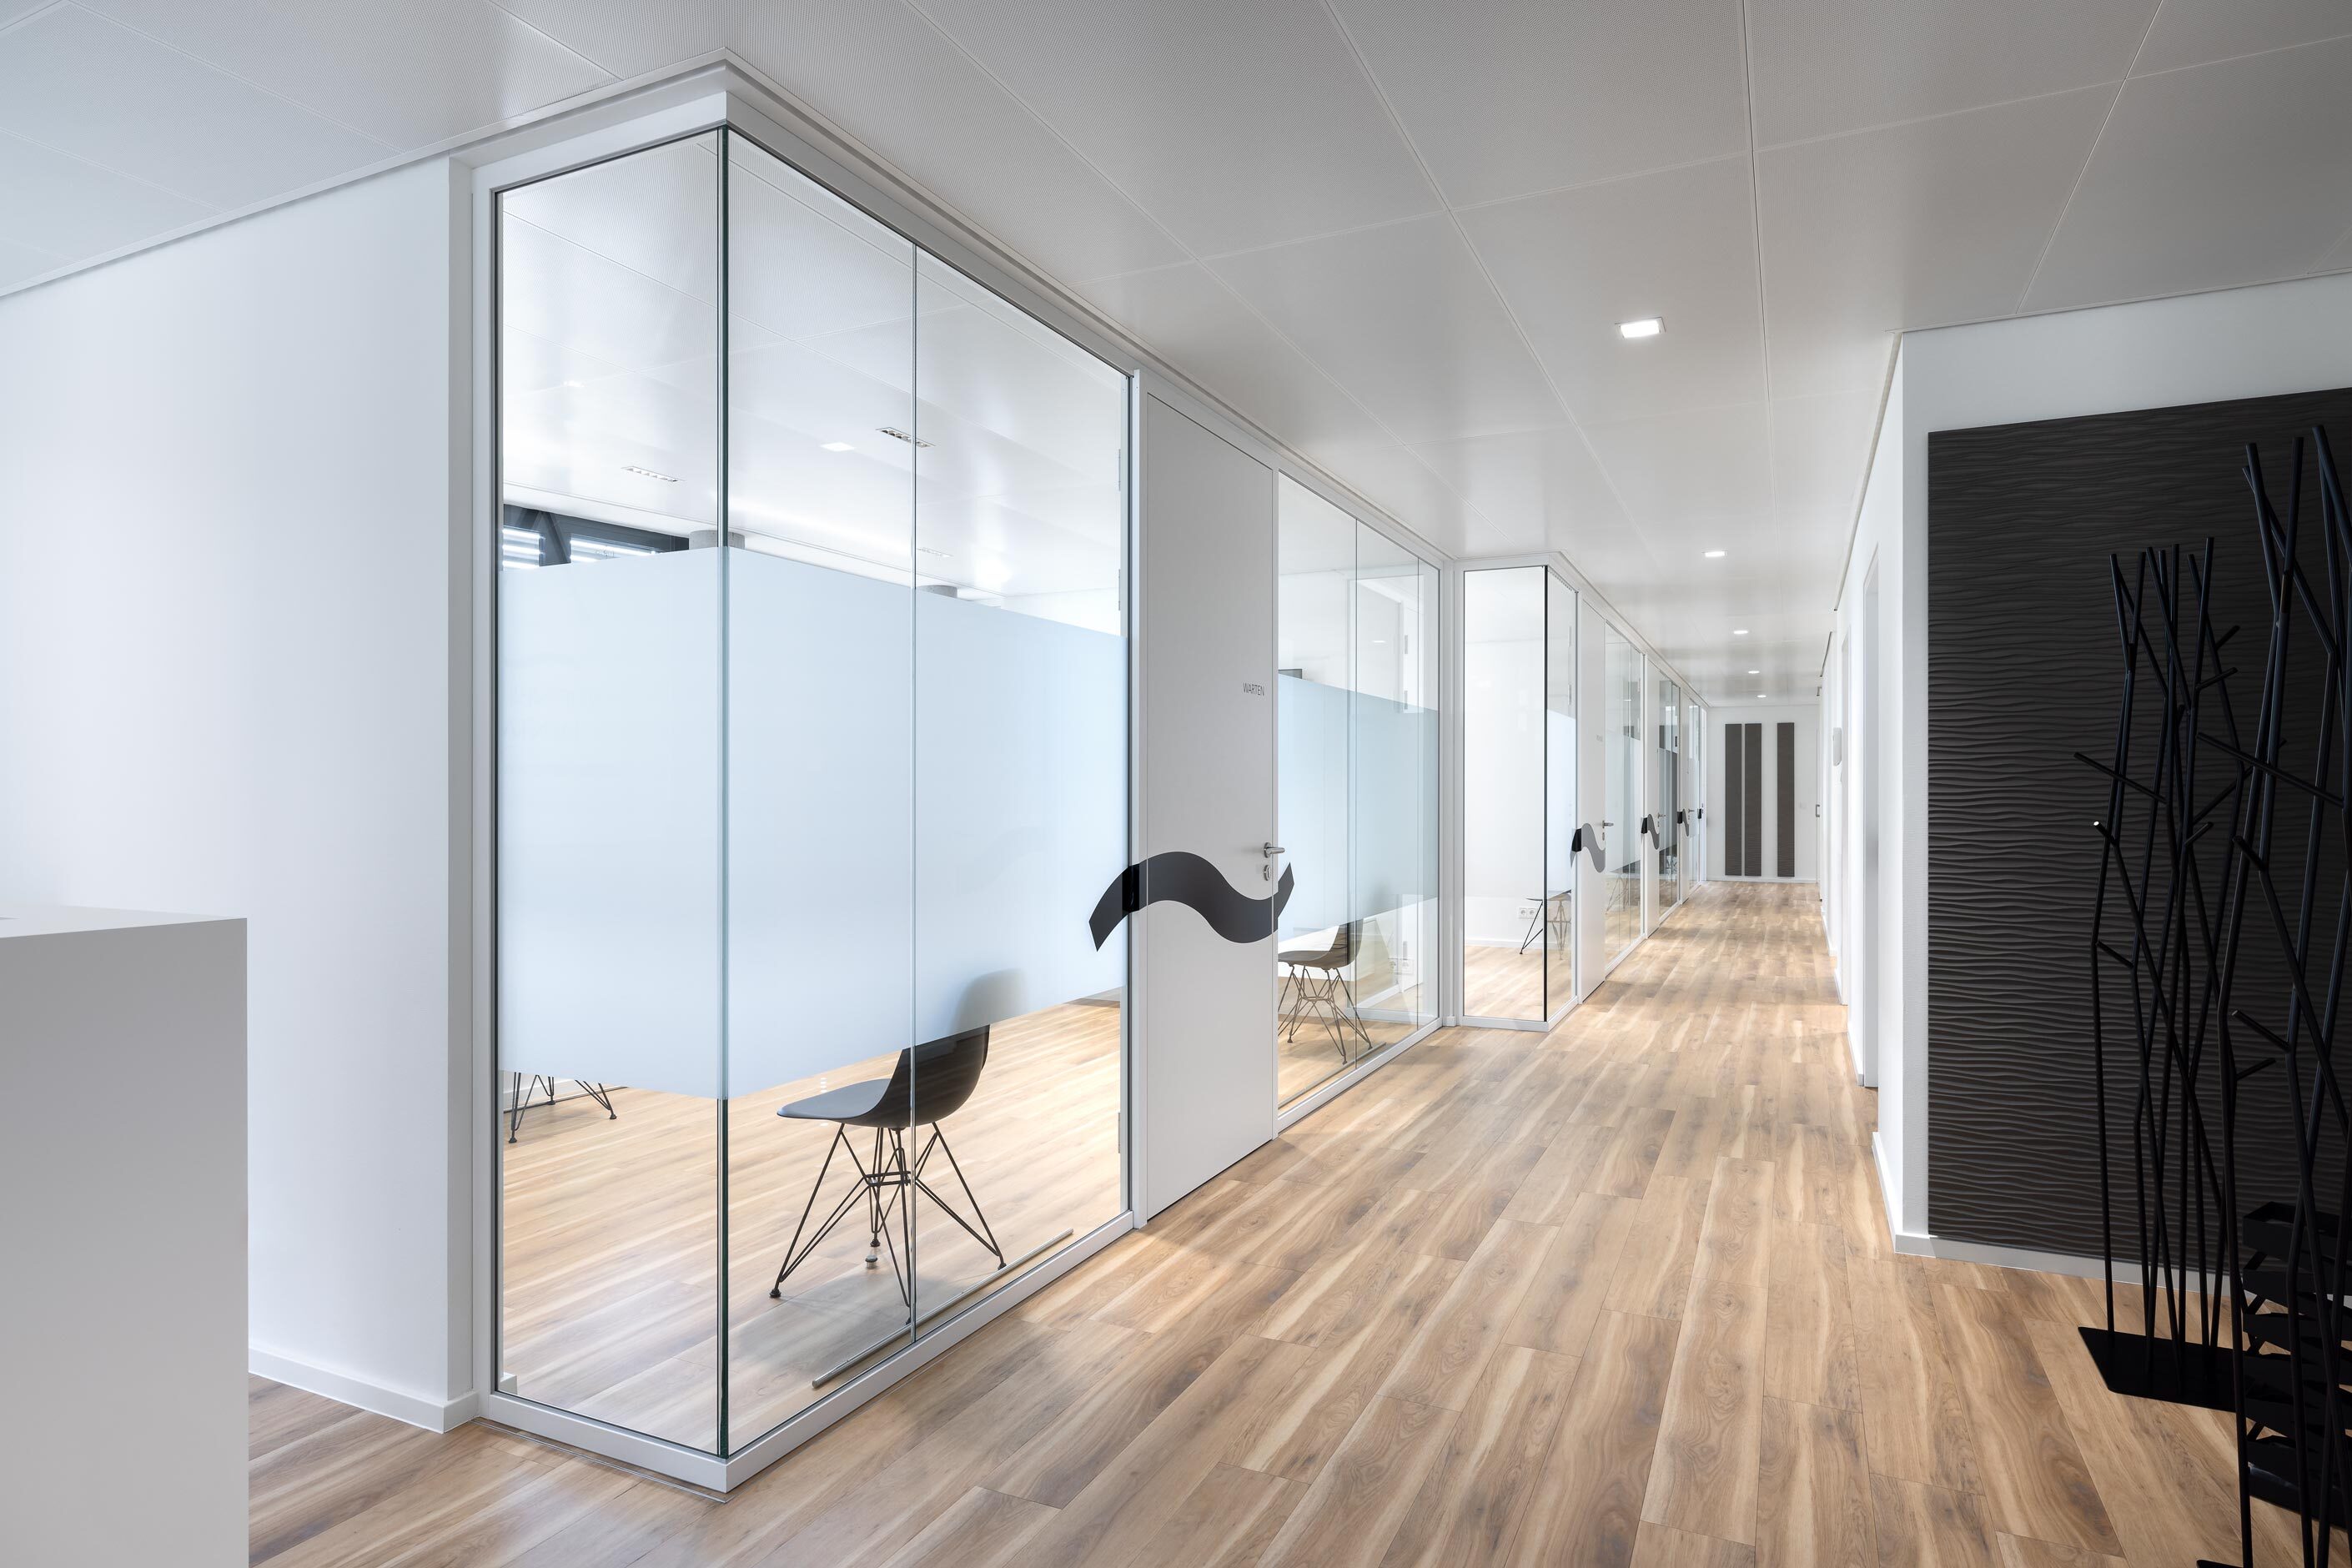 Rheinhalde Development | rooms of the dental practice separeted by glass walls